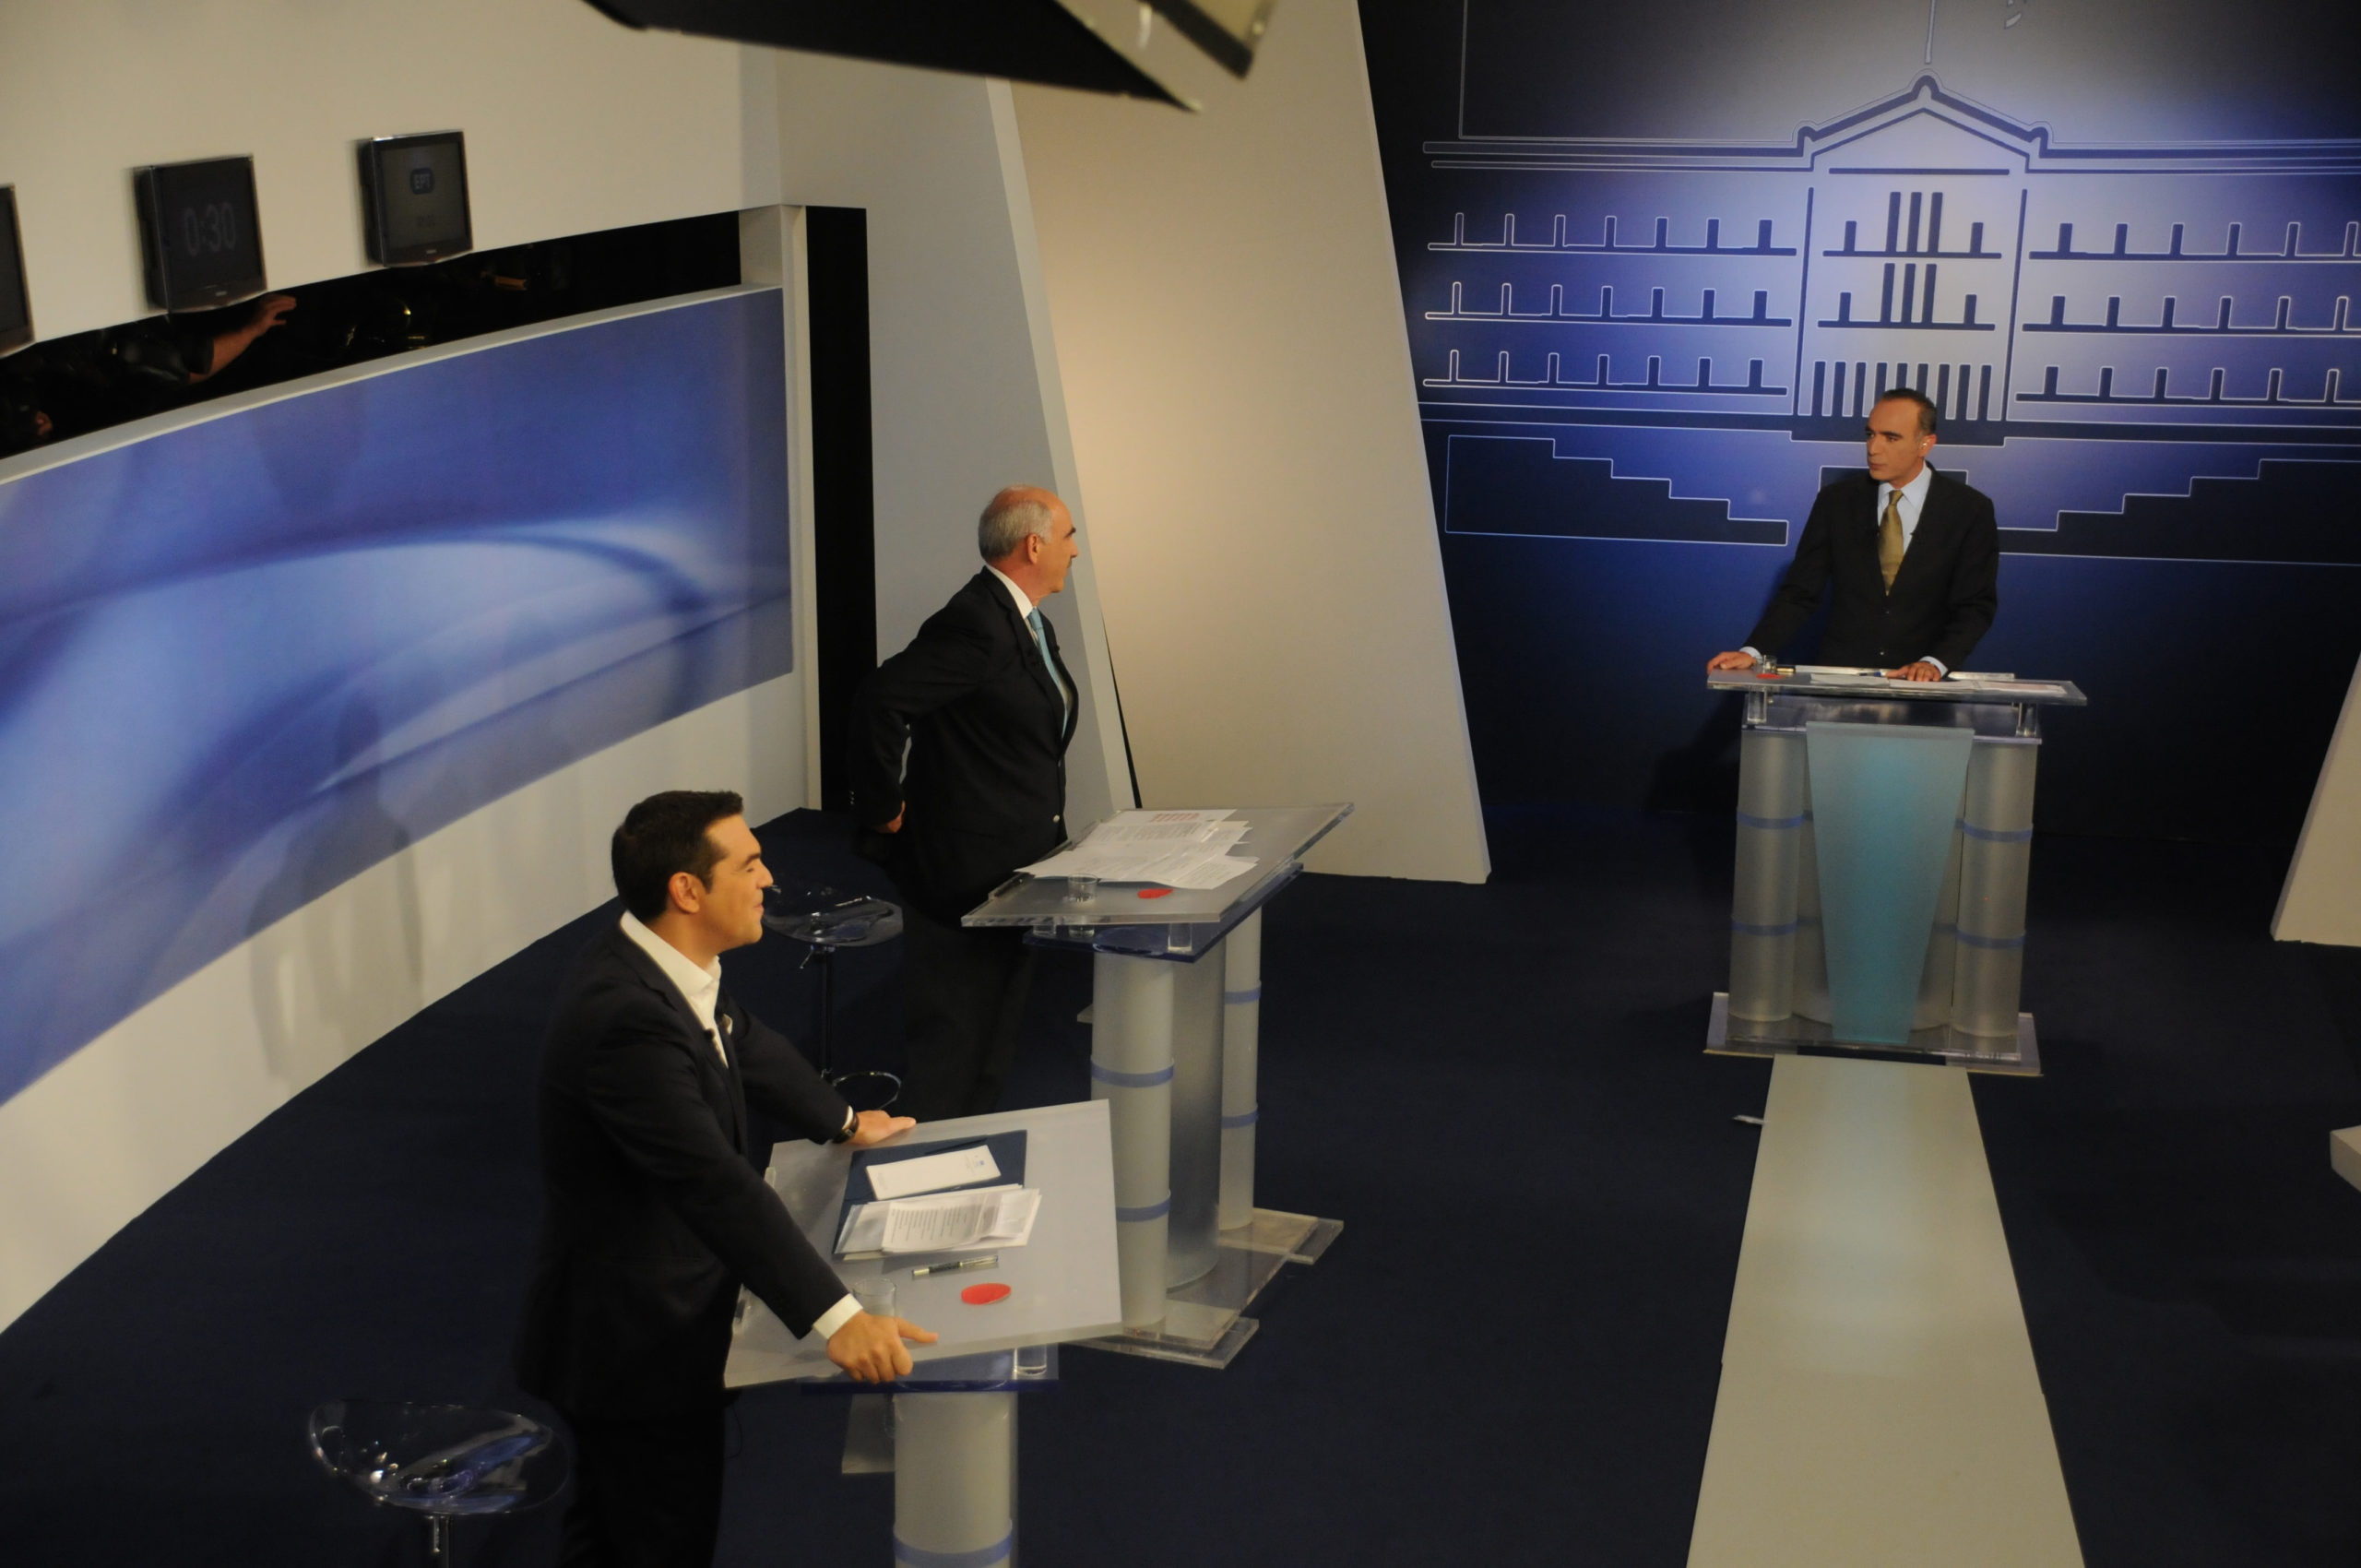 Tα στιγμιότυπα που ξεχώρισαν στο debate – BINTEO